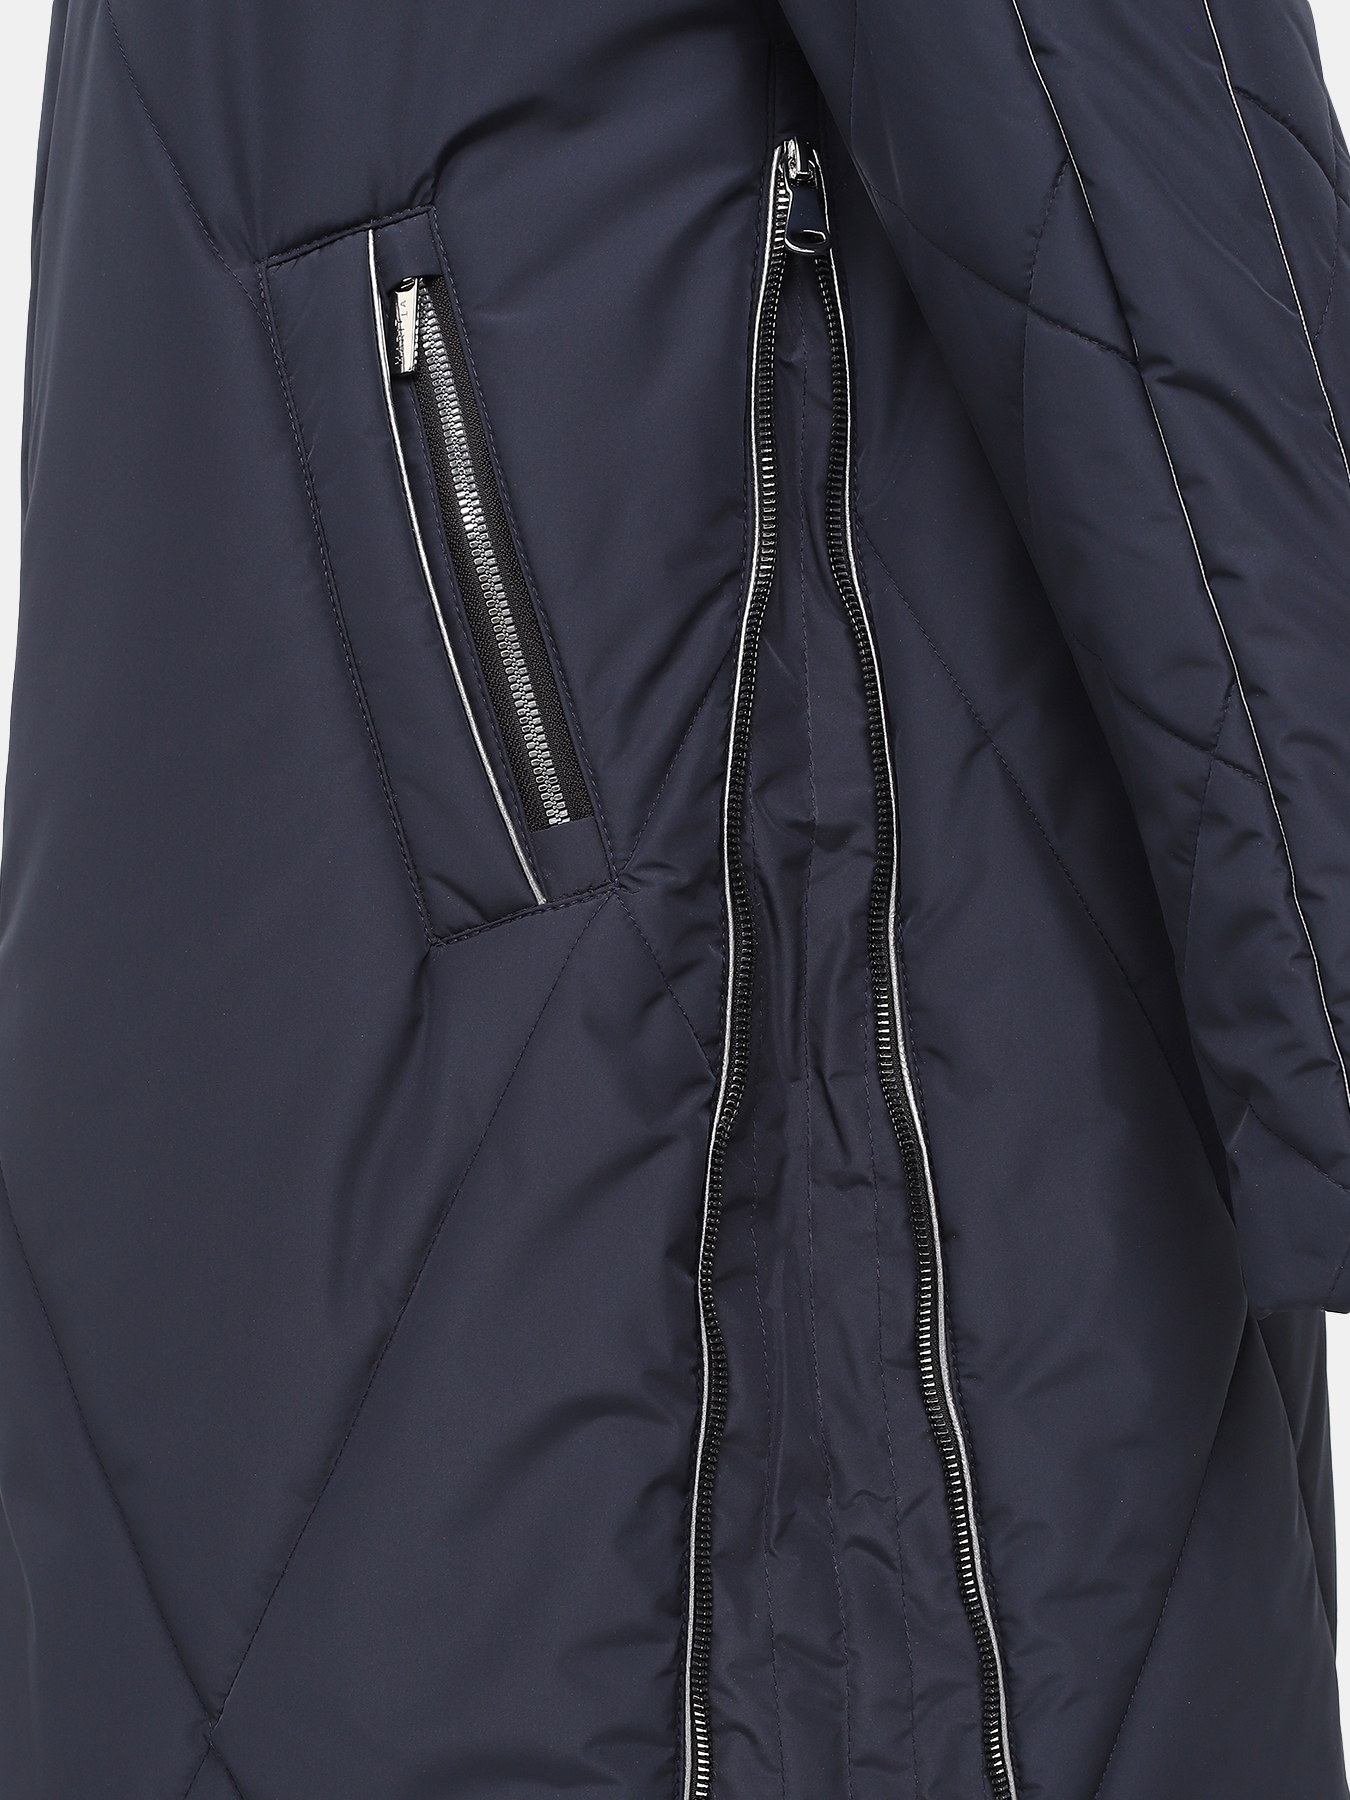 Пальто зимнее Maritta 433620-021, цвет темно-синий, размер 46 - фото 2